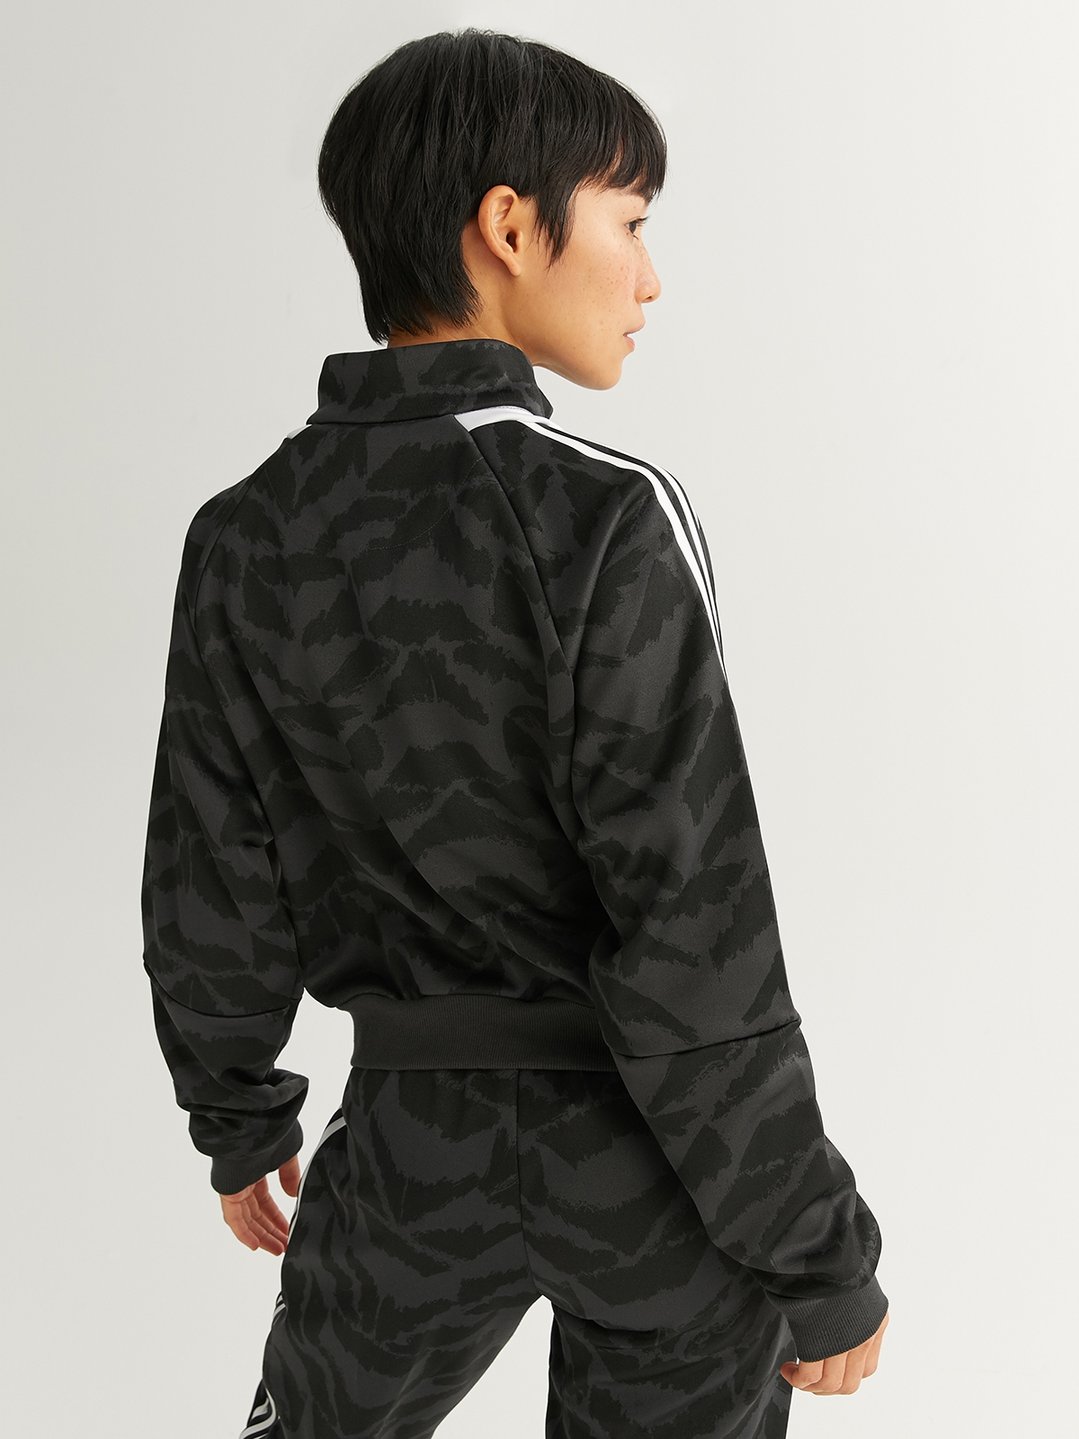 Tiro Suit Up Lifestyle Track Top - Carbon/Black/White - Pomelo Fashion